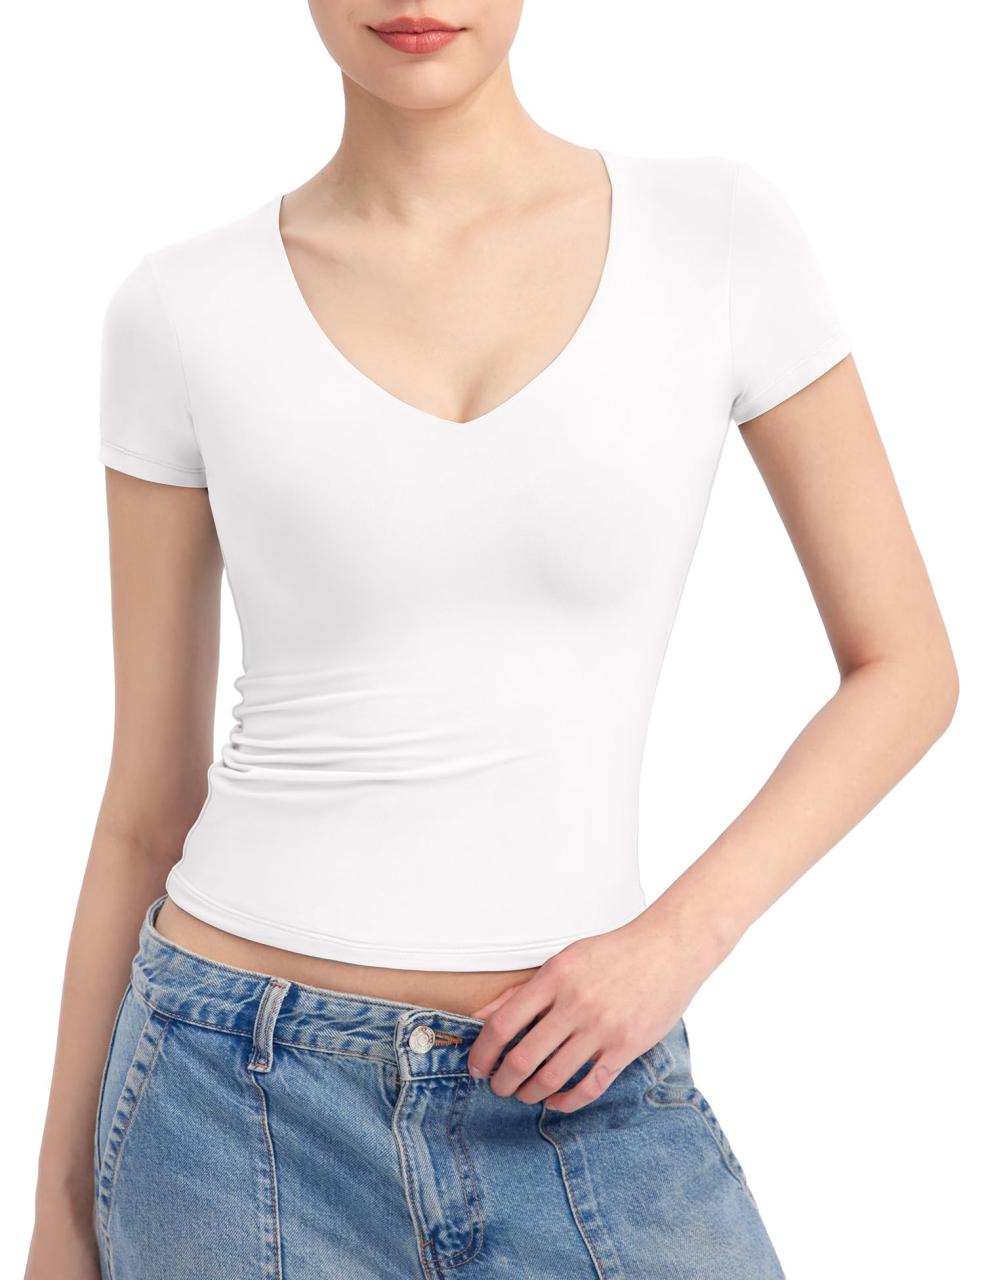 PUMIEY Women's V Neck Short Sleeve T Shirts